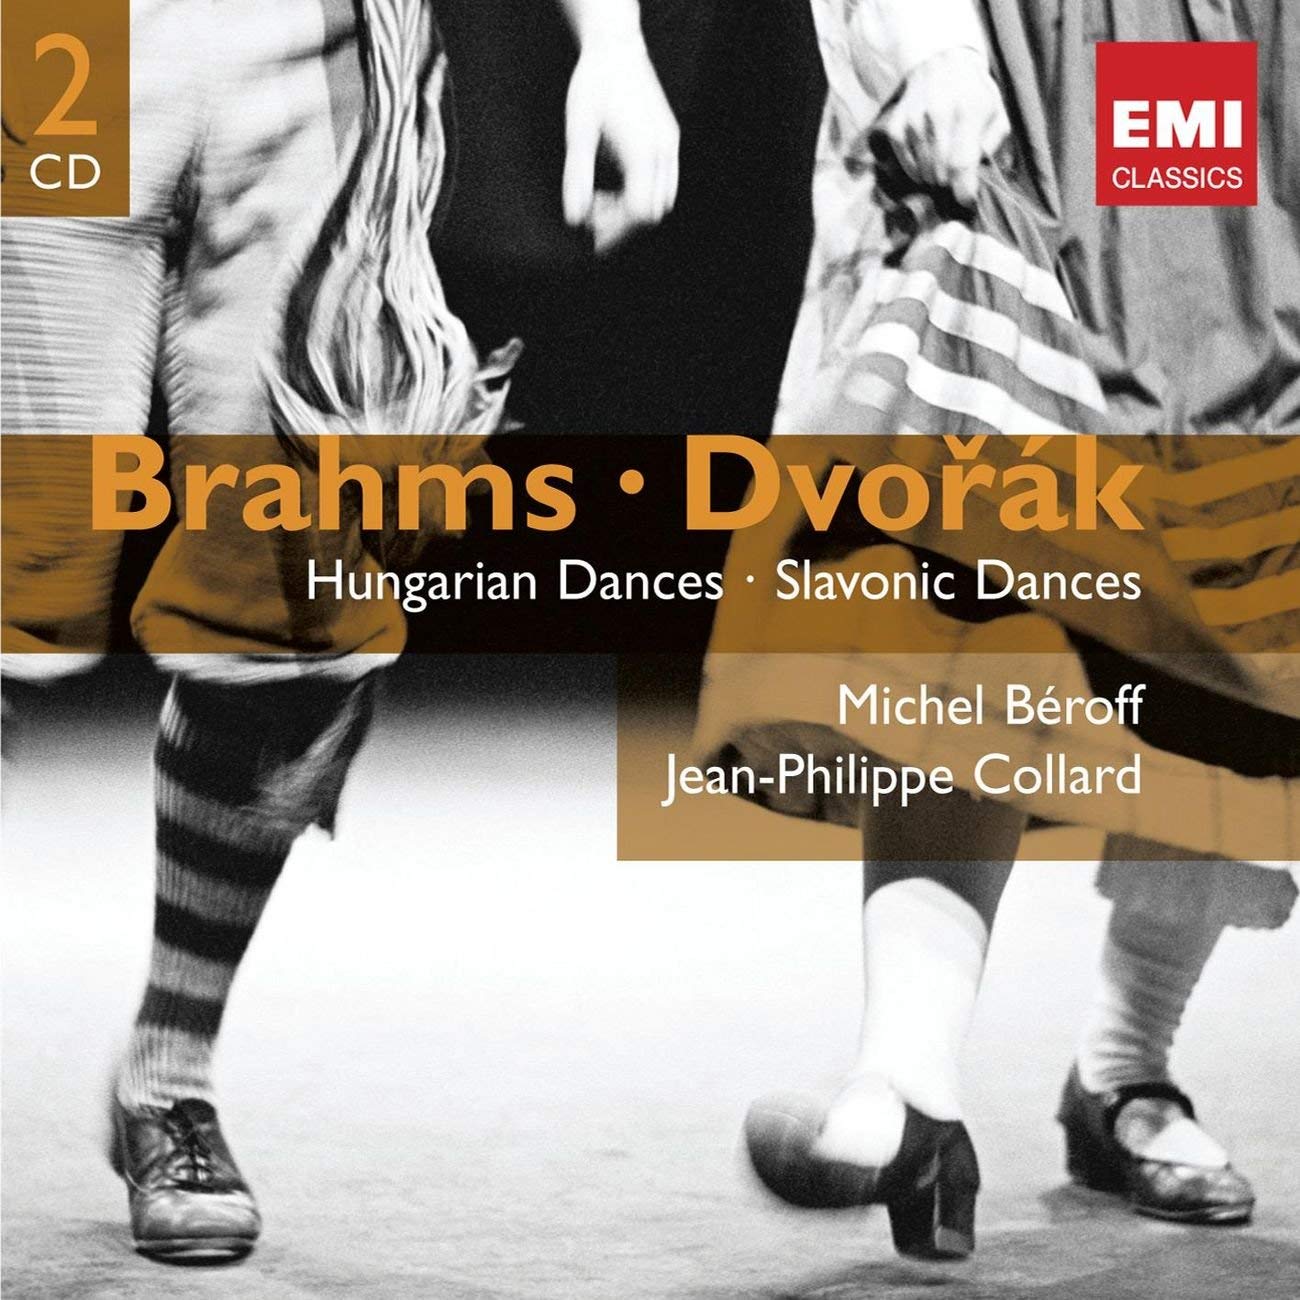 Jean-Philippe Collard, Brahms